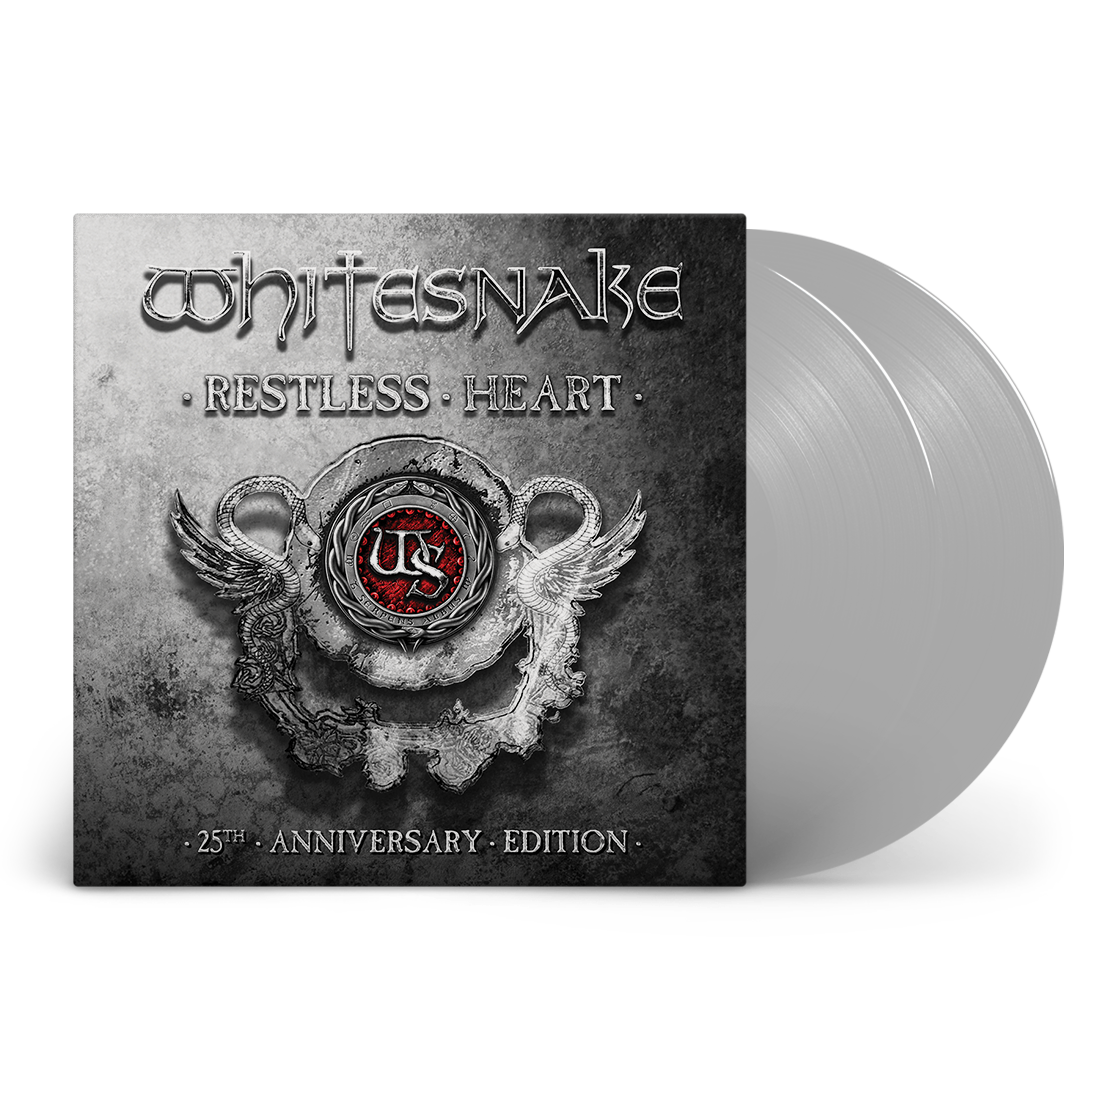 Restless Heart (Deluxe Edition): Silver Vinyl 2LP